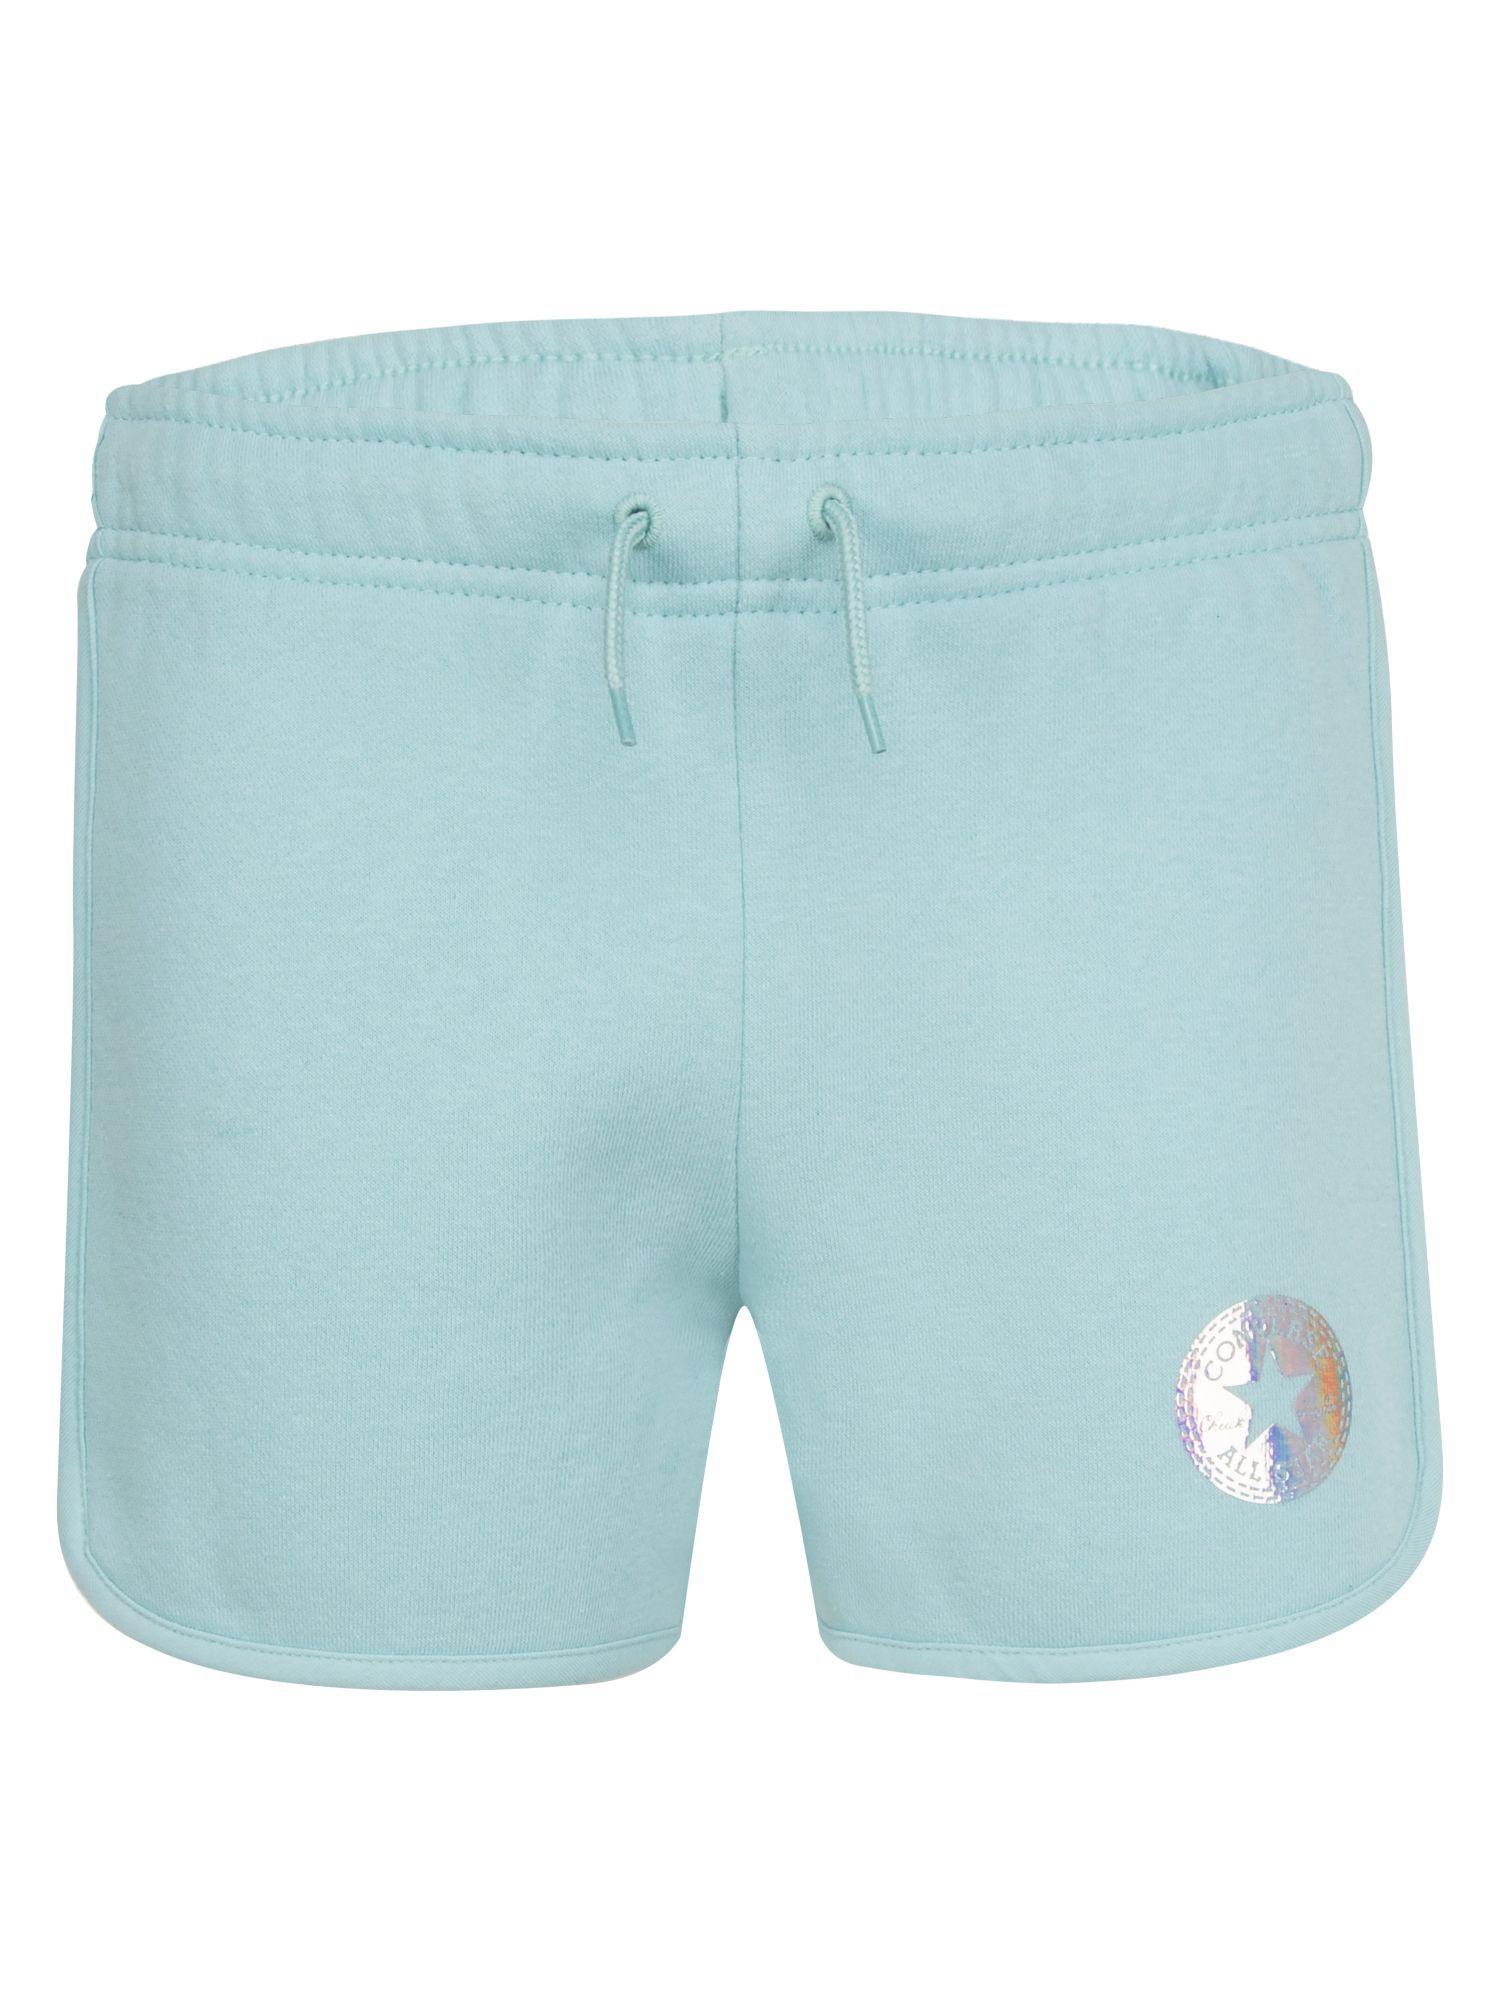 girls-turquoise-solid-plain-shorts